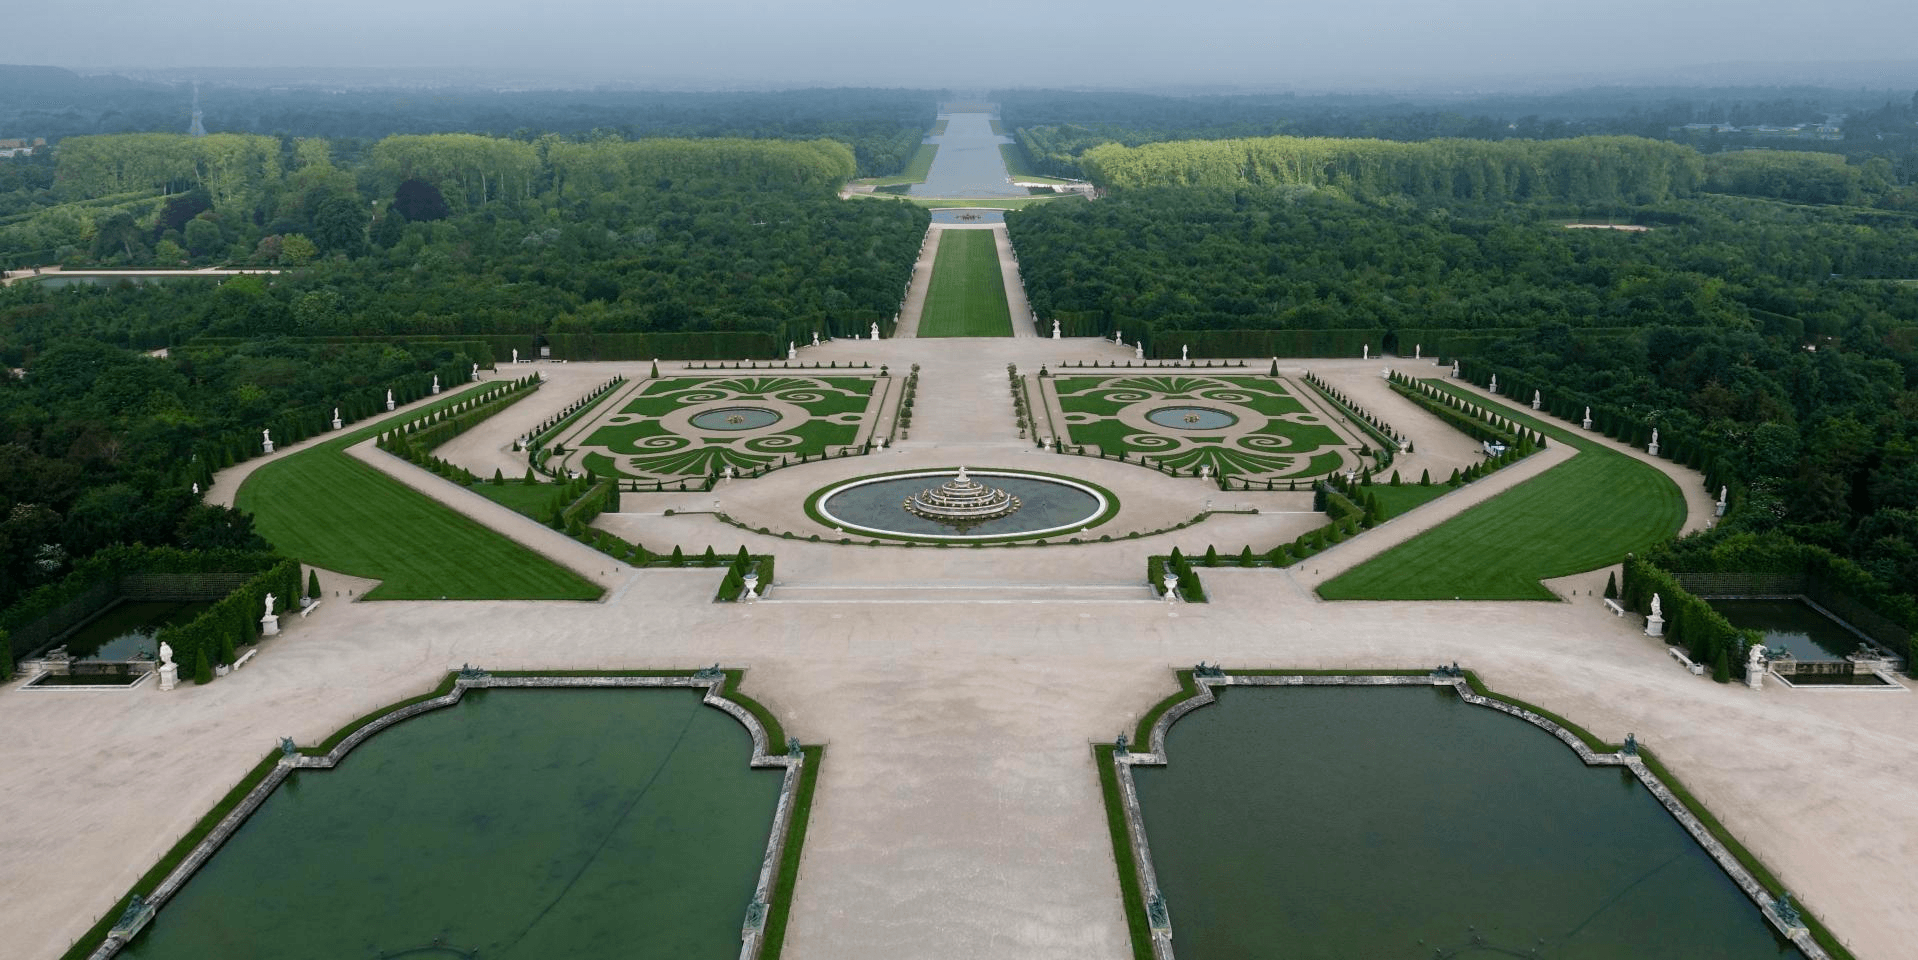 Source: Chateau Versailles 